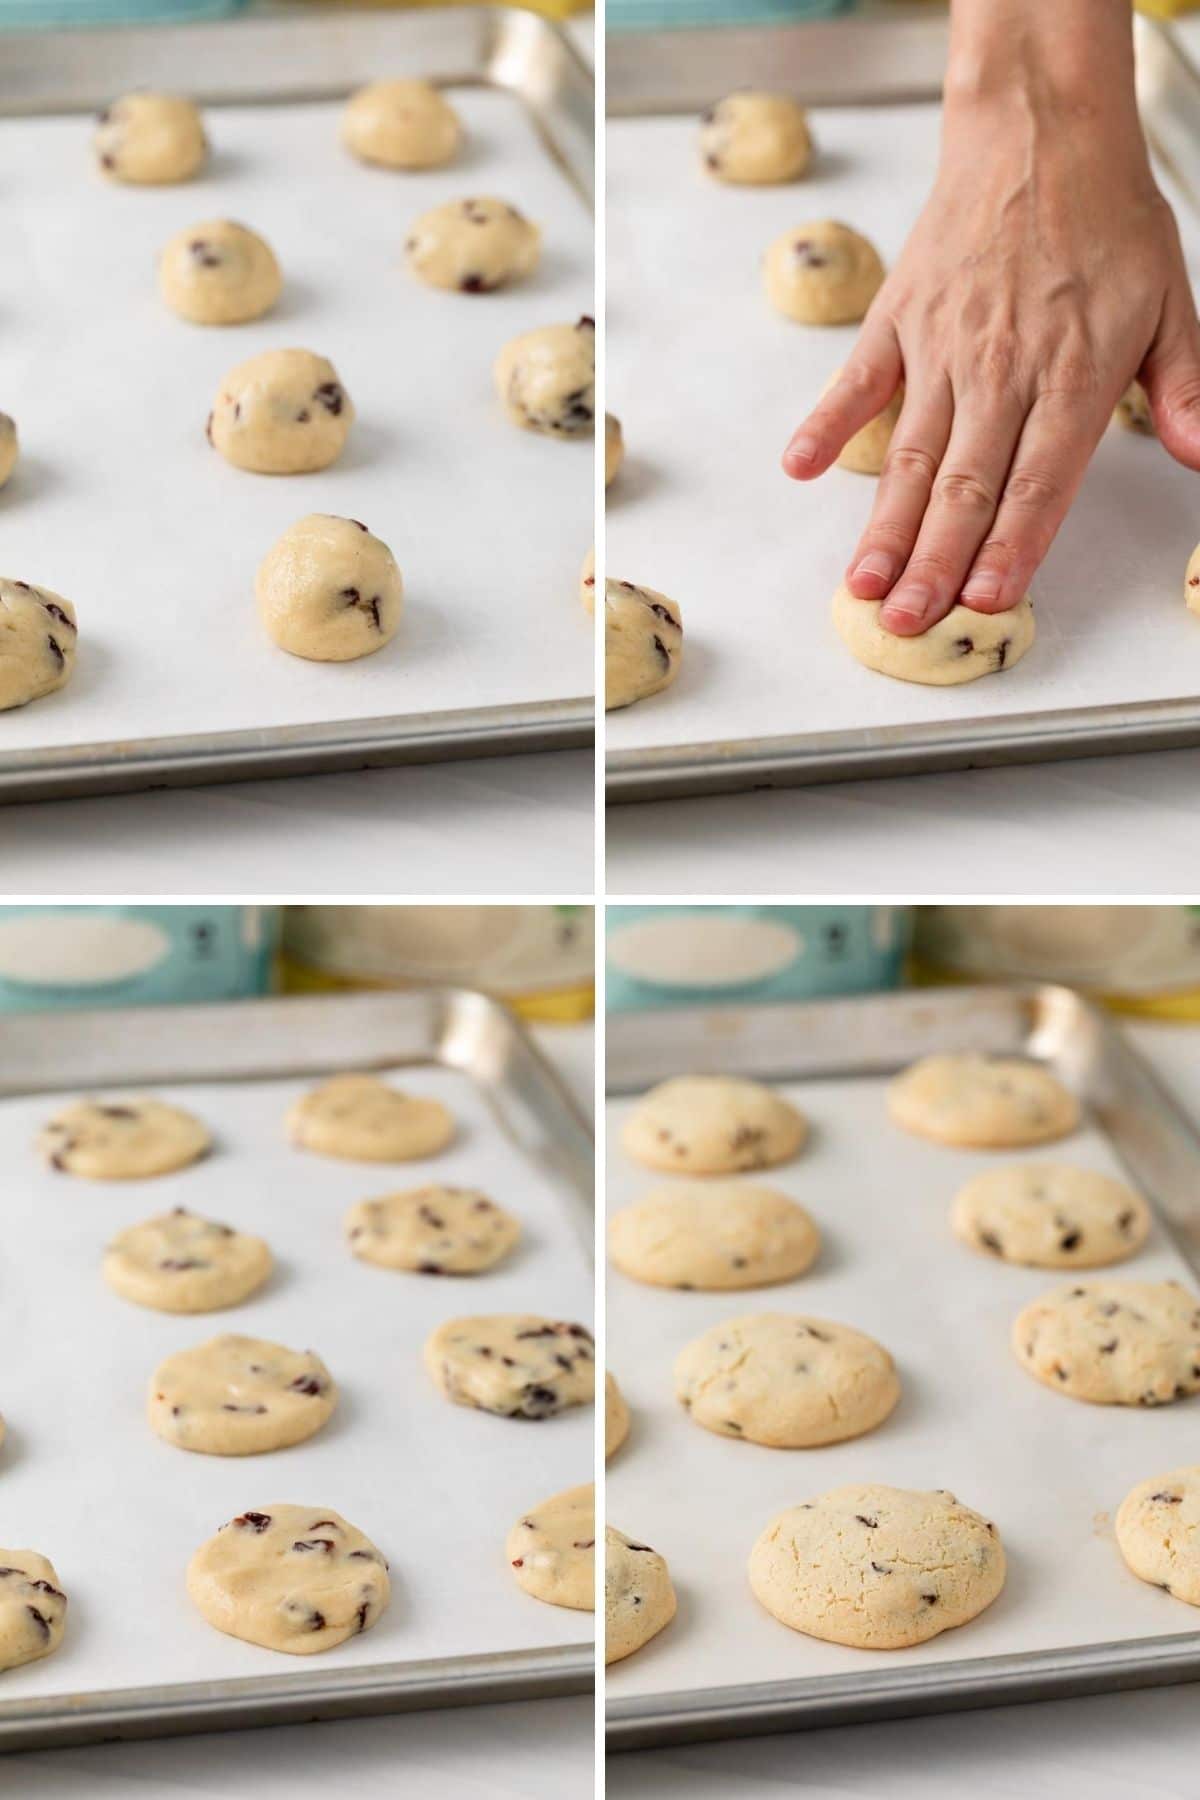 process shots showing how to flatten cookie dough balls before baking